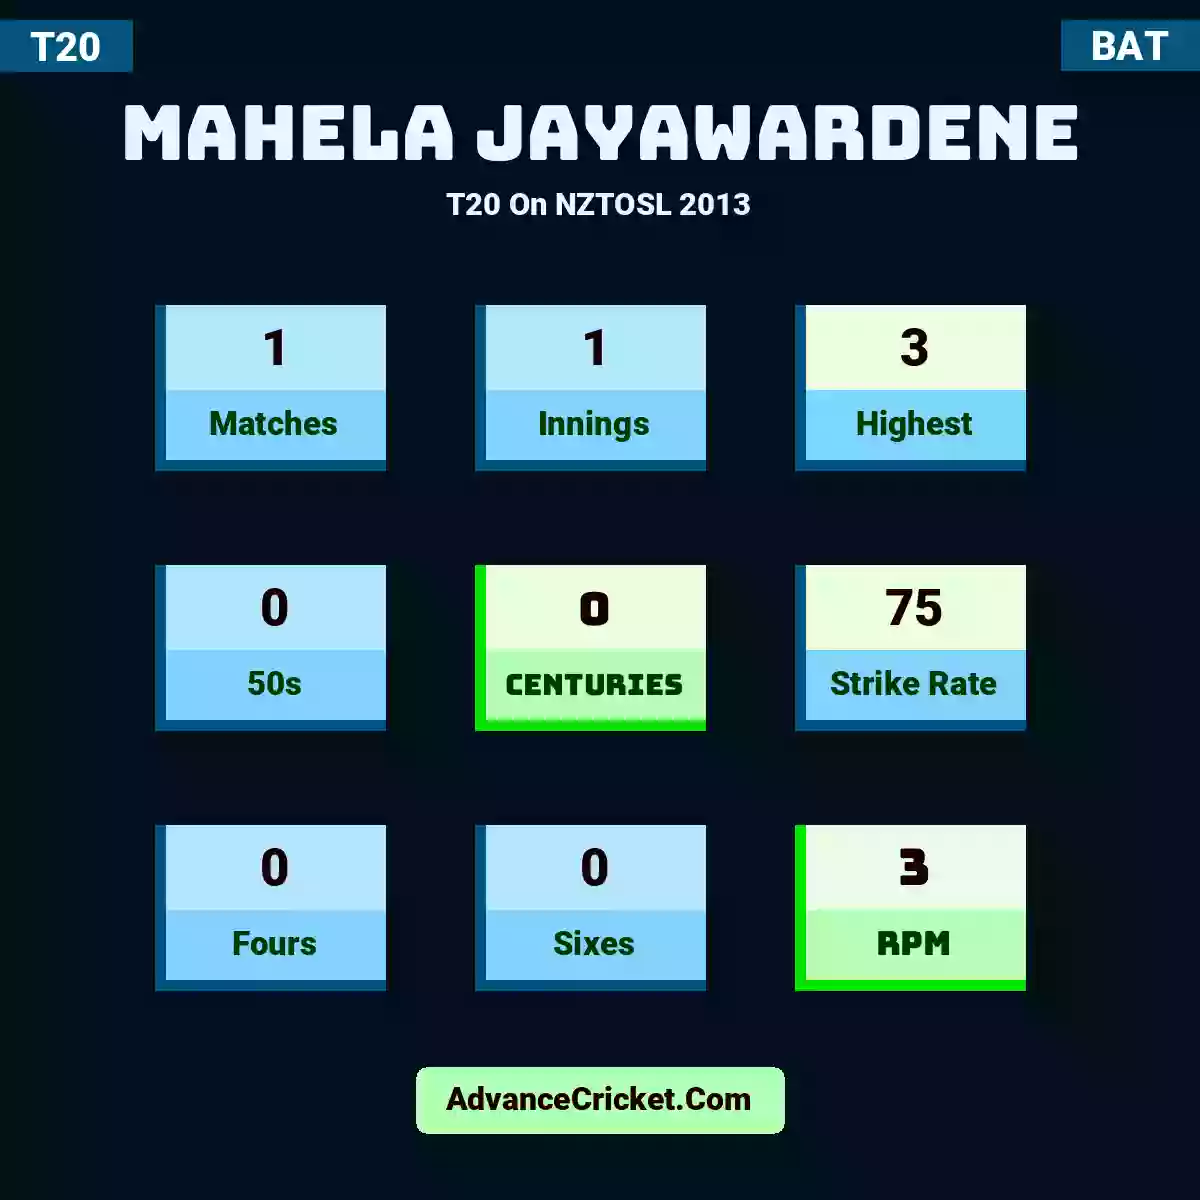 Mahela Jayawardene T20  On NZTOSL 2013, Mahela Jayawardene played 1 matches, scored 3 runs as highest, 0 half-centuries, and 0 centuries, with a strike rate of 75. M.Jayawardene hit 0 fours and 0 sixes, with an RPM of 3.